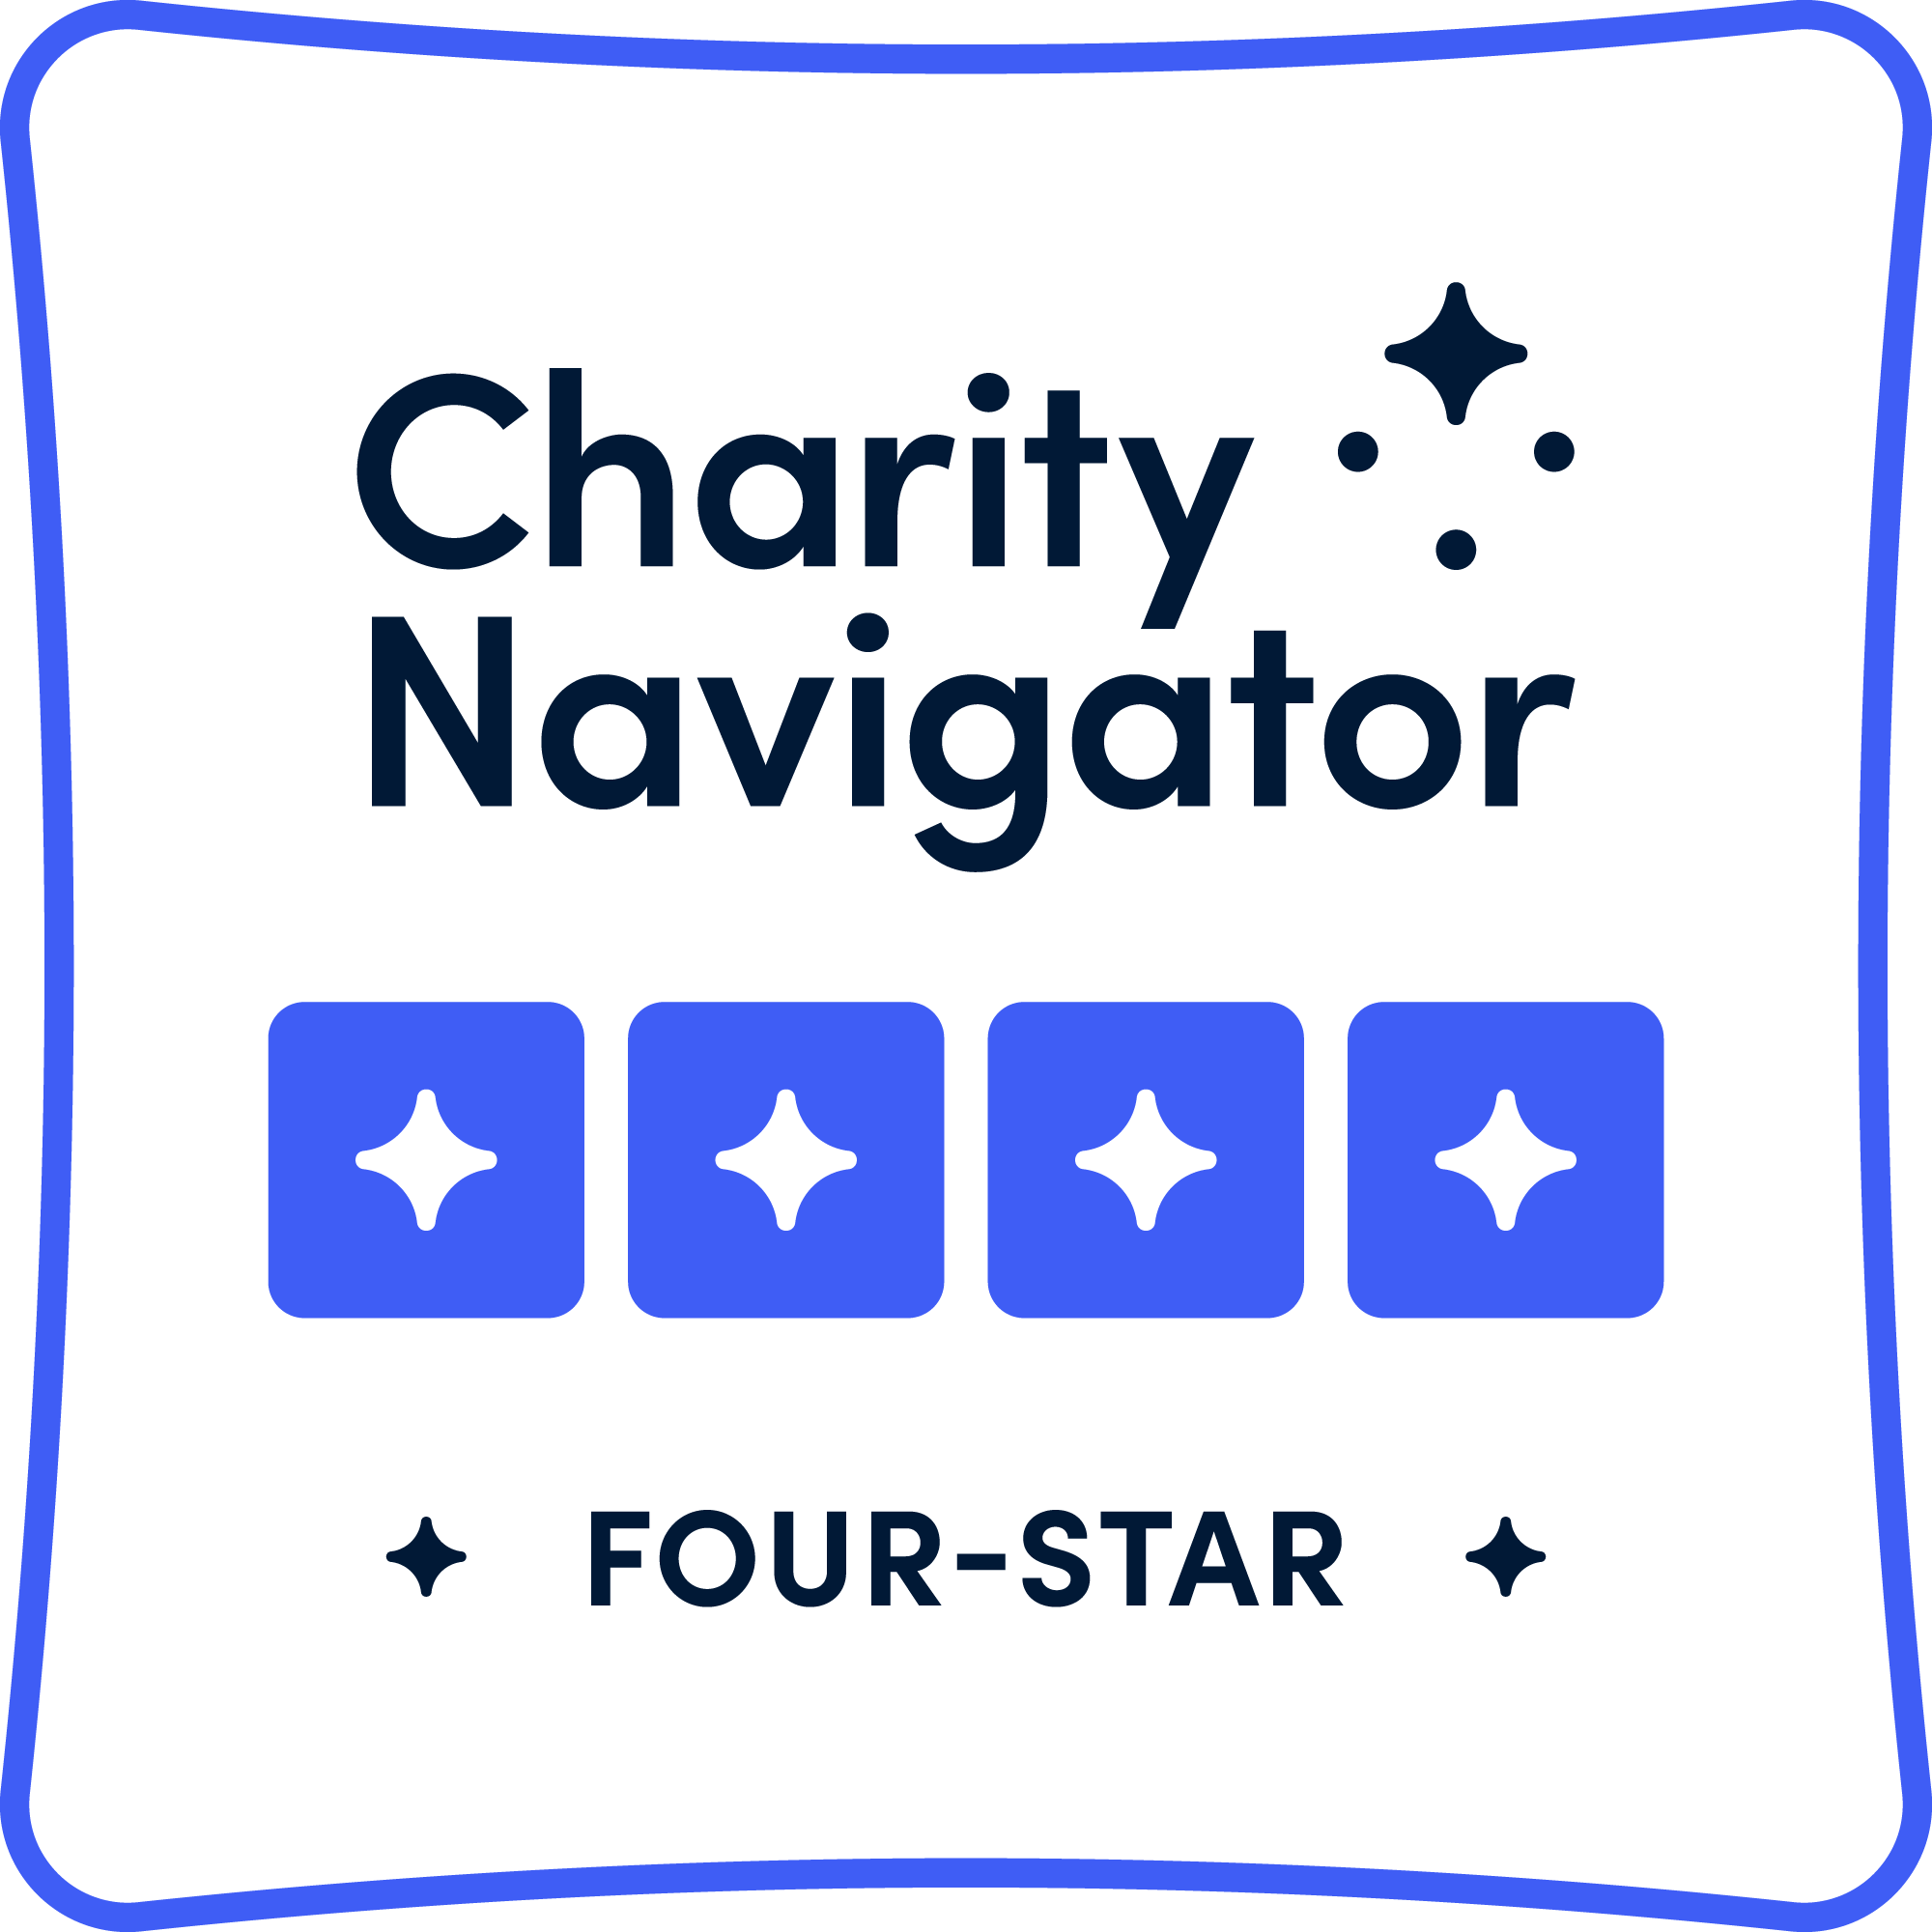 Charity Navigator Four-star award icon